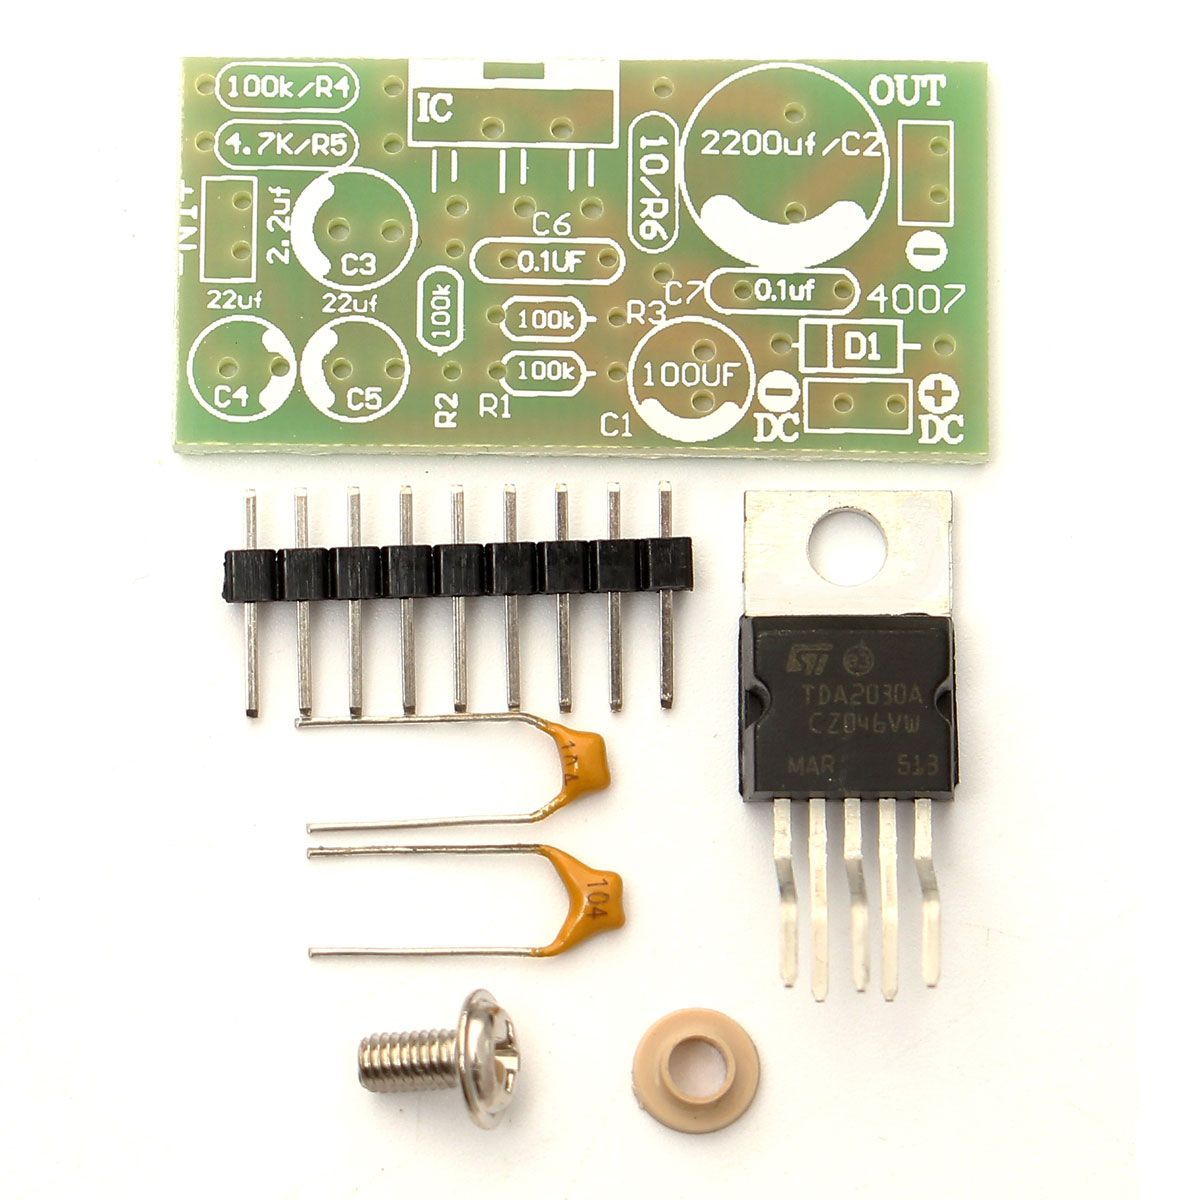 20pcs-DIY-TDA2030A-Audio-Amplifier-Board-Kit-Mono-Power-18W-DC-9V-24V-1366971